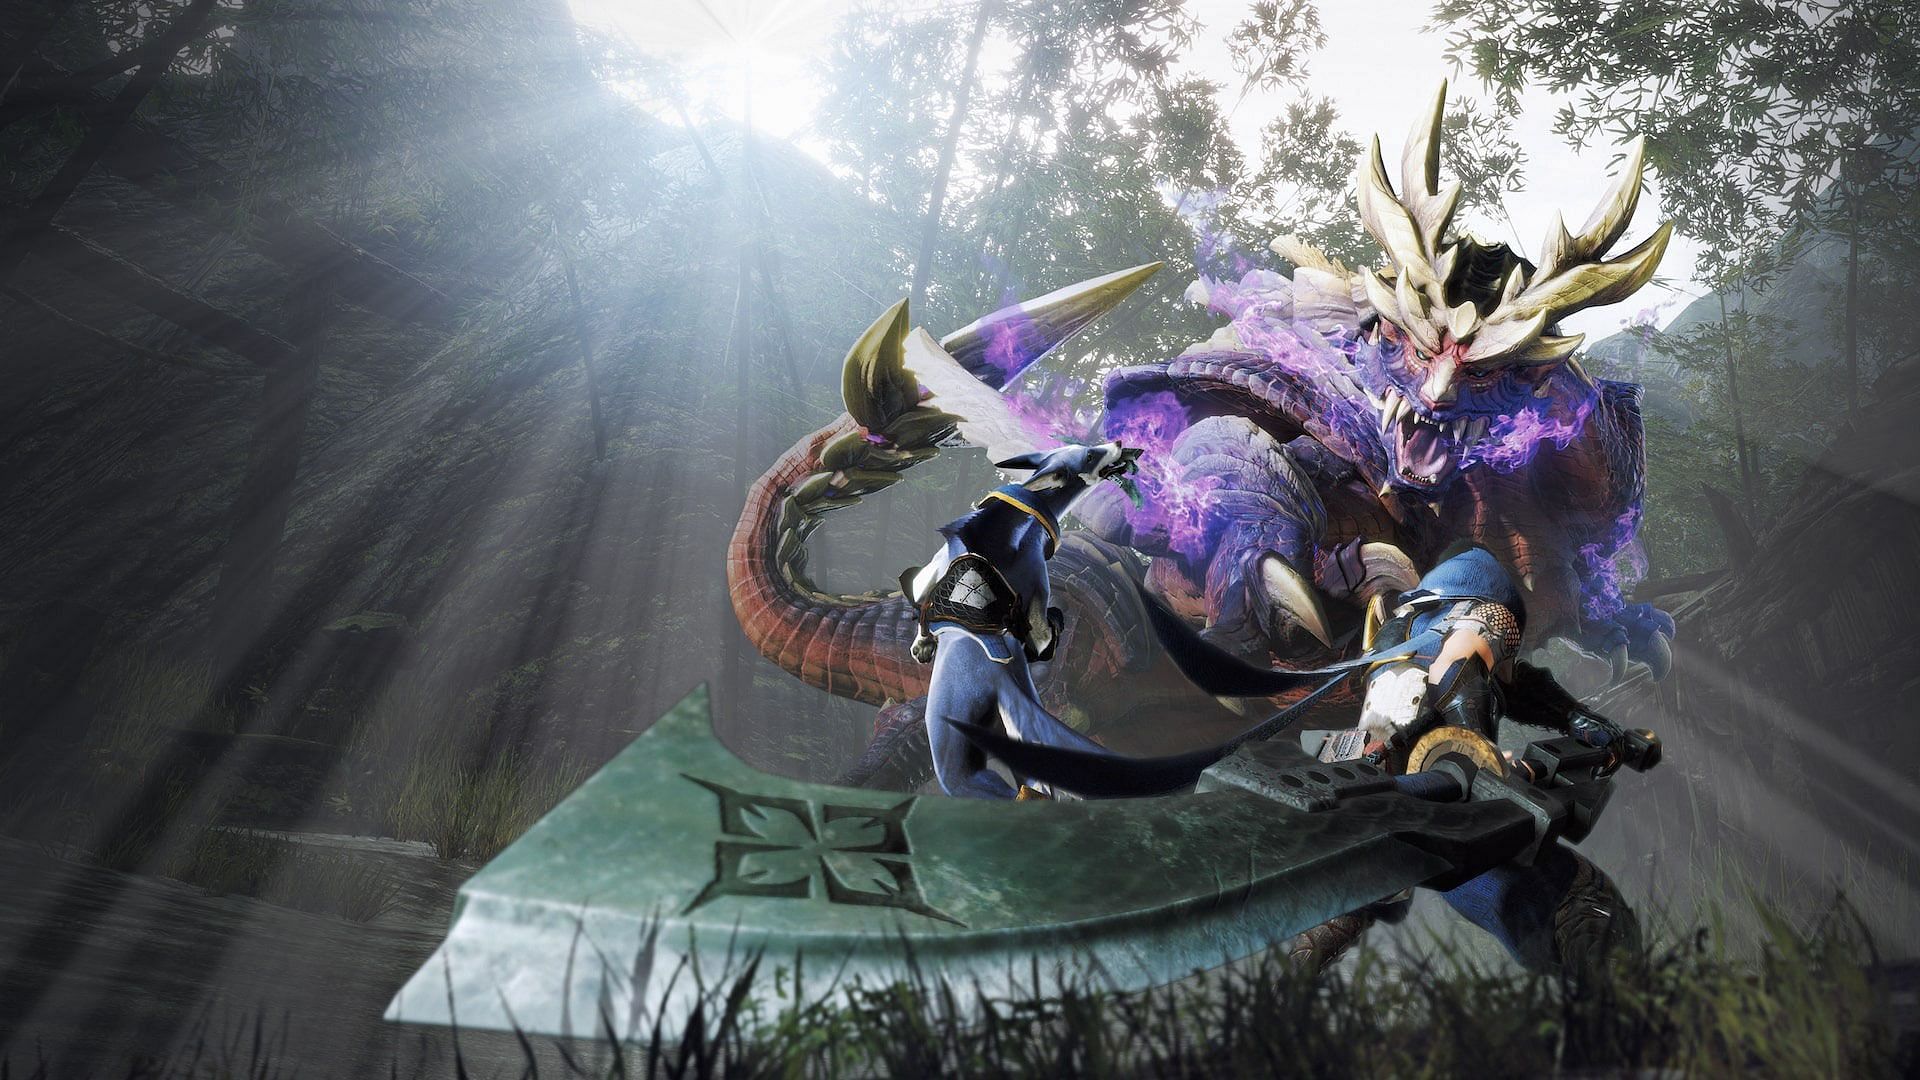 Monster Hunter Rise: Sunbreak: Everything Included in the Digital